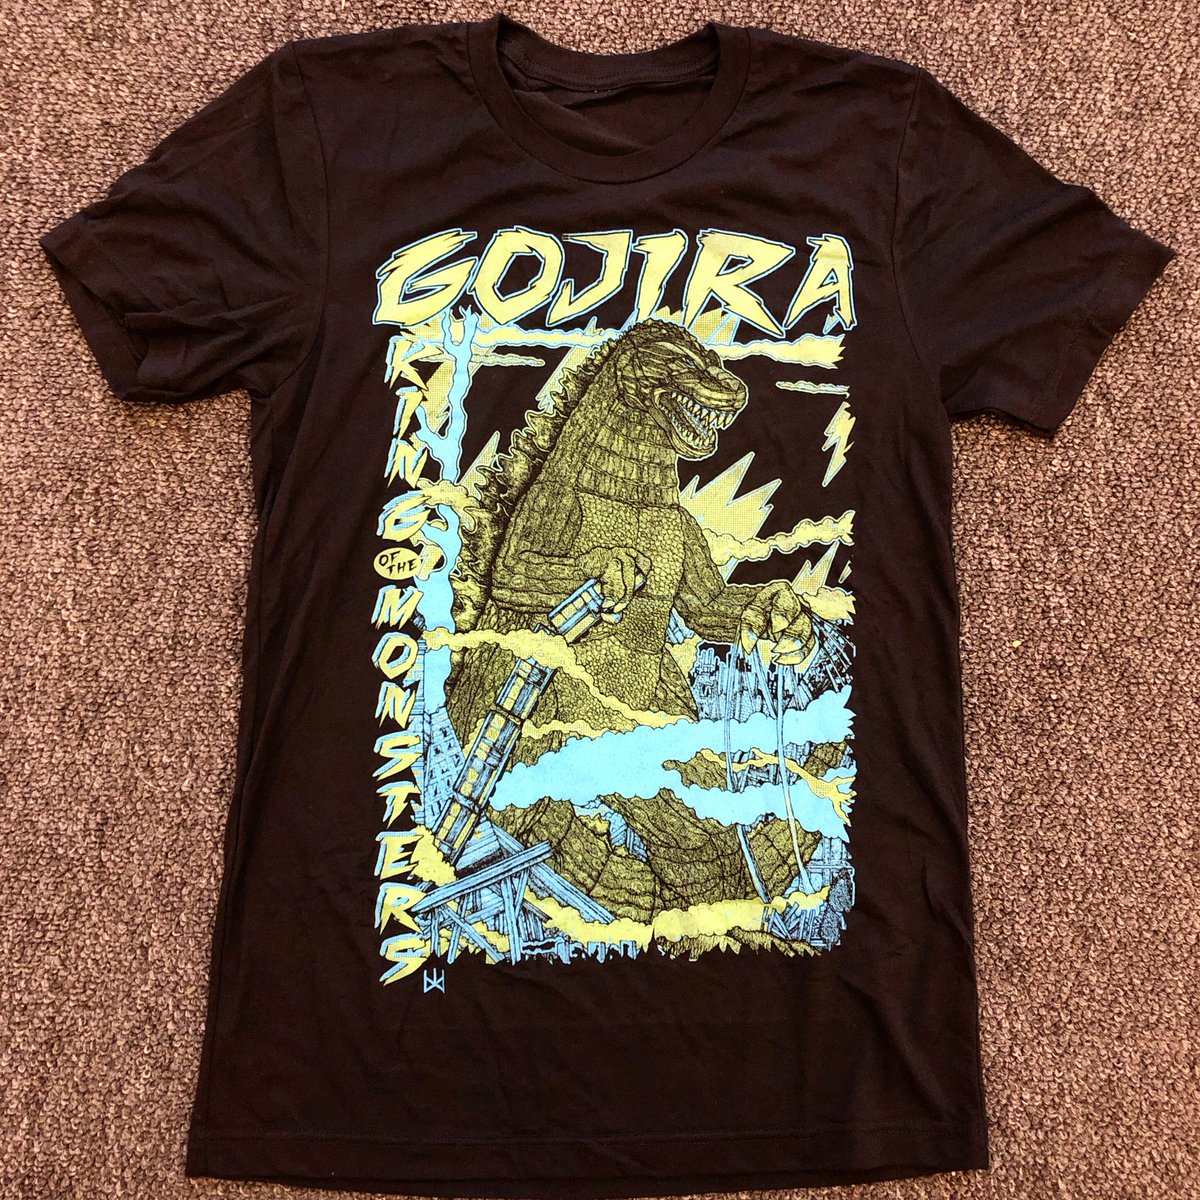 New #Godzilla color way available tonight @planetdorshak this #firstfriday #gallerywalk #gojira #kaiju #kingofthemonsters @paseoartsdistrict